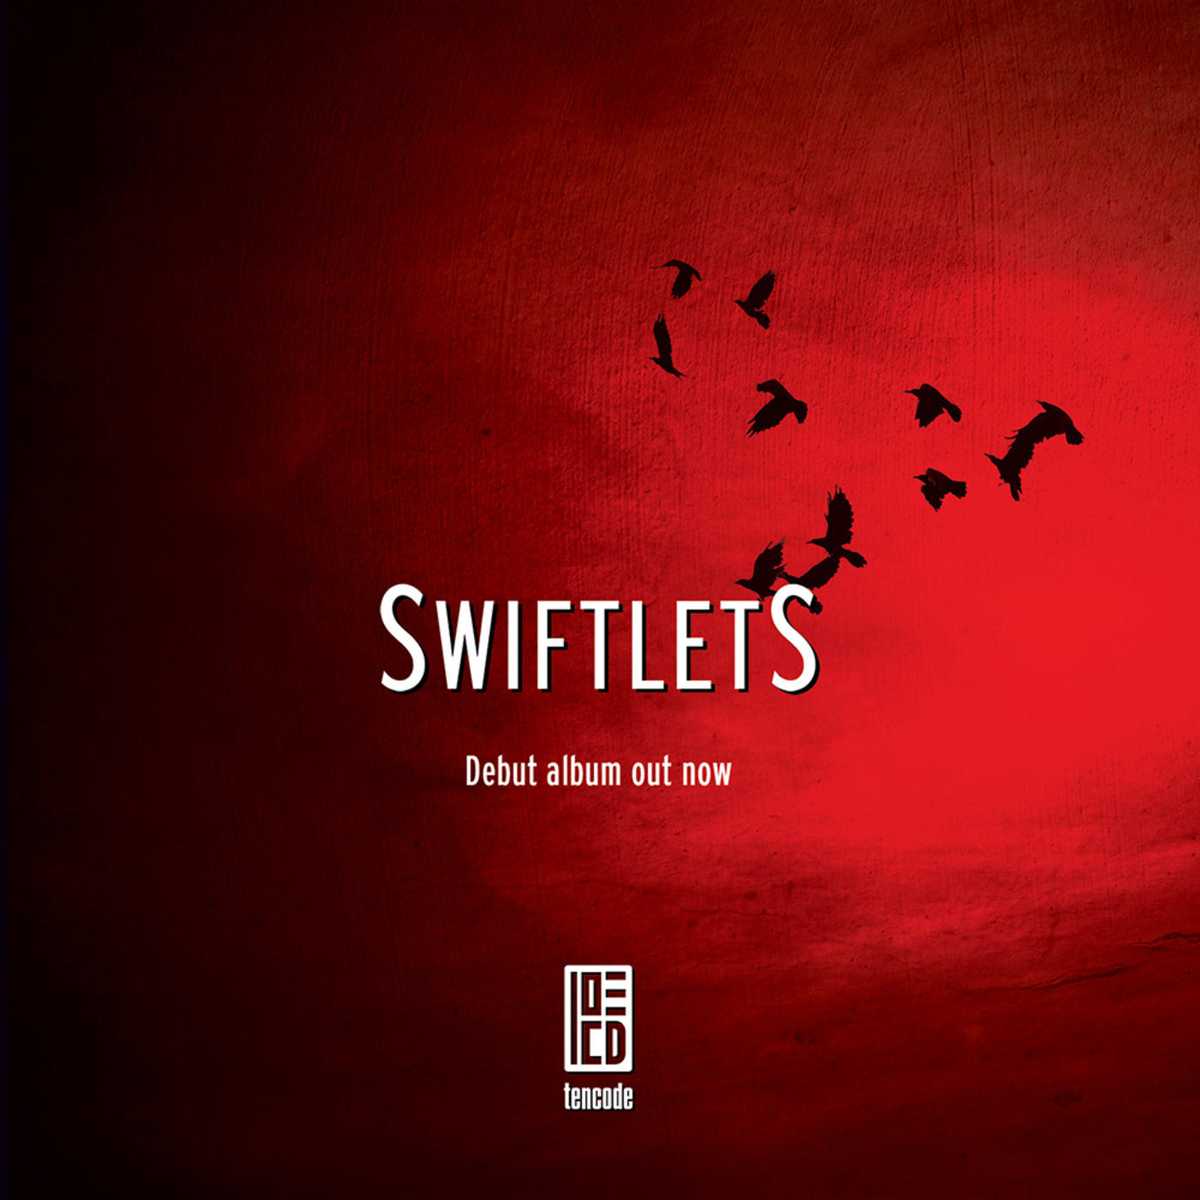 10 Code - Swiftlets